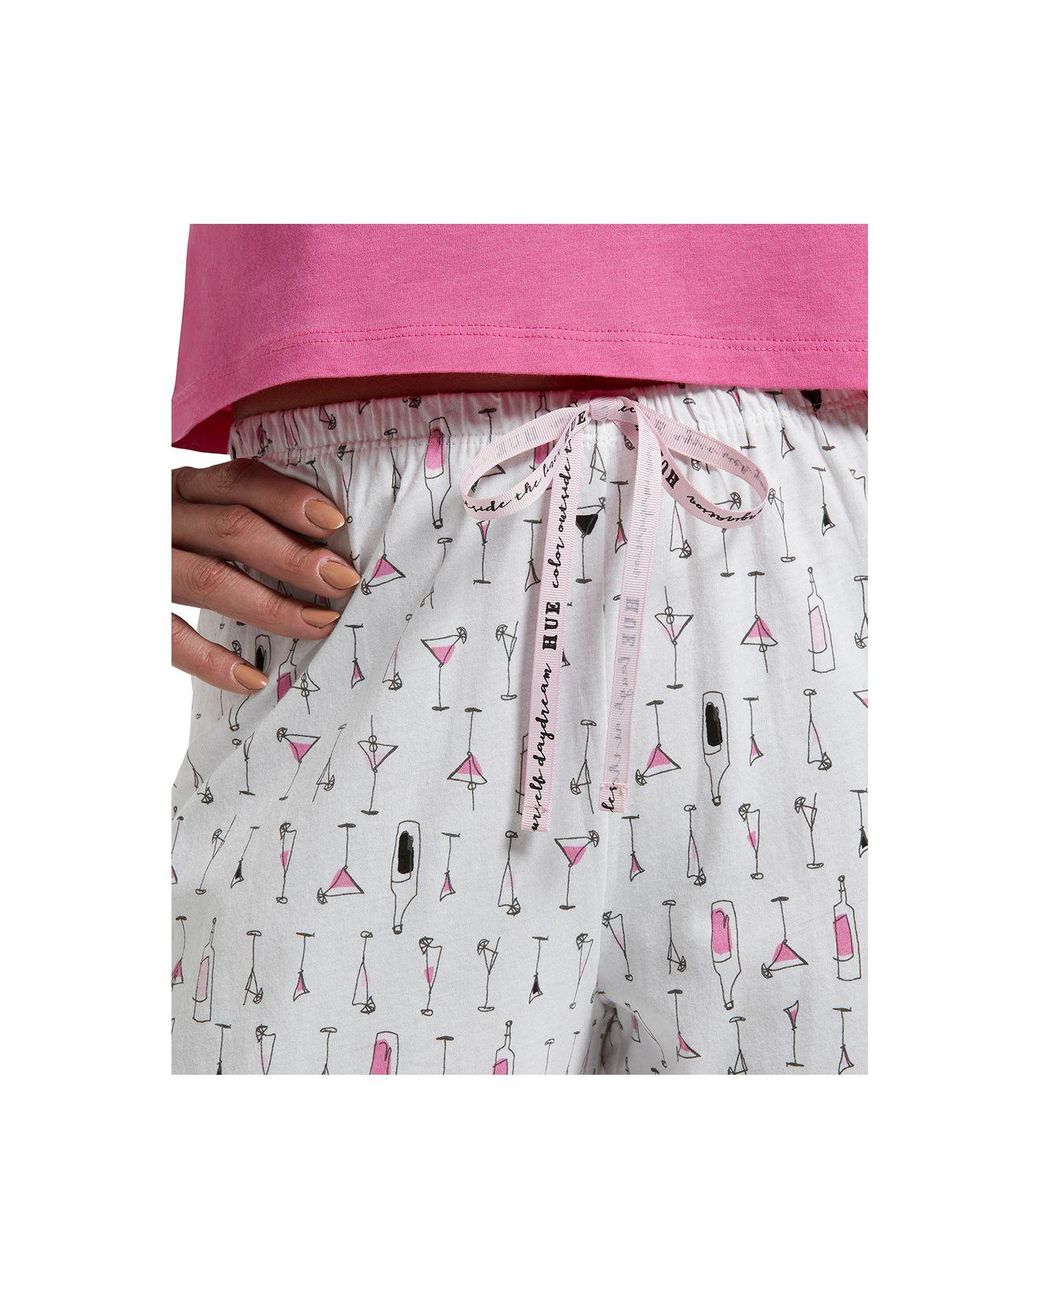 Buy ASK - JS - LCD & CO - Women's Cotton Capri Night Pyjamas Nightwear Capri  for Girls and Women Printed 3/4 Pyjama, Free Size - (Pack of 2, 28 inches  Waist,